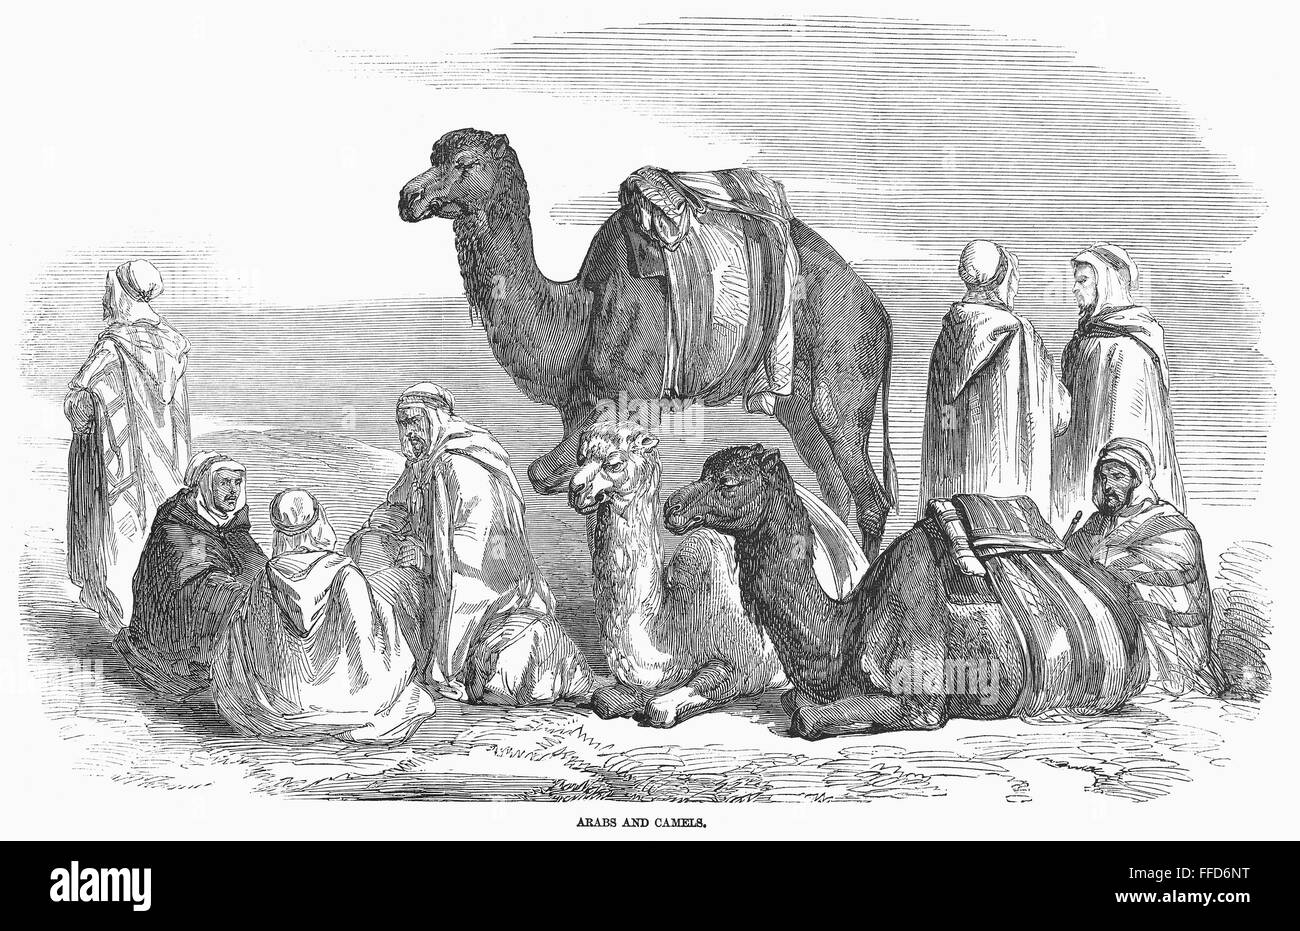 ALGERIA: CAMELS, 1858. /nLine engraving, English, 1858. Stock Photo